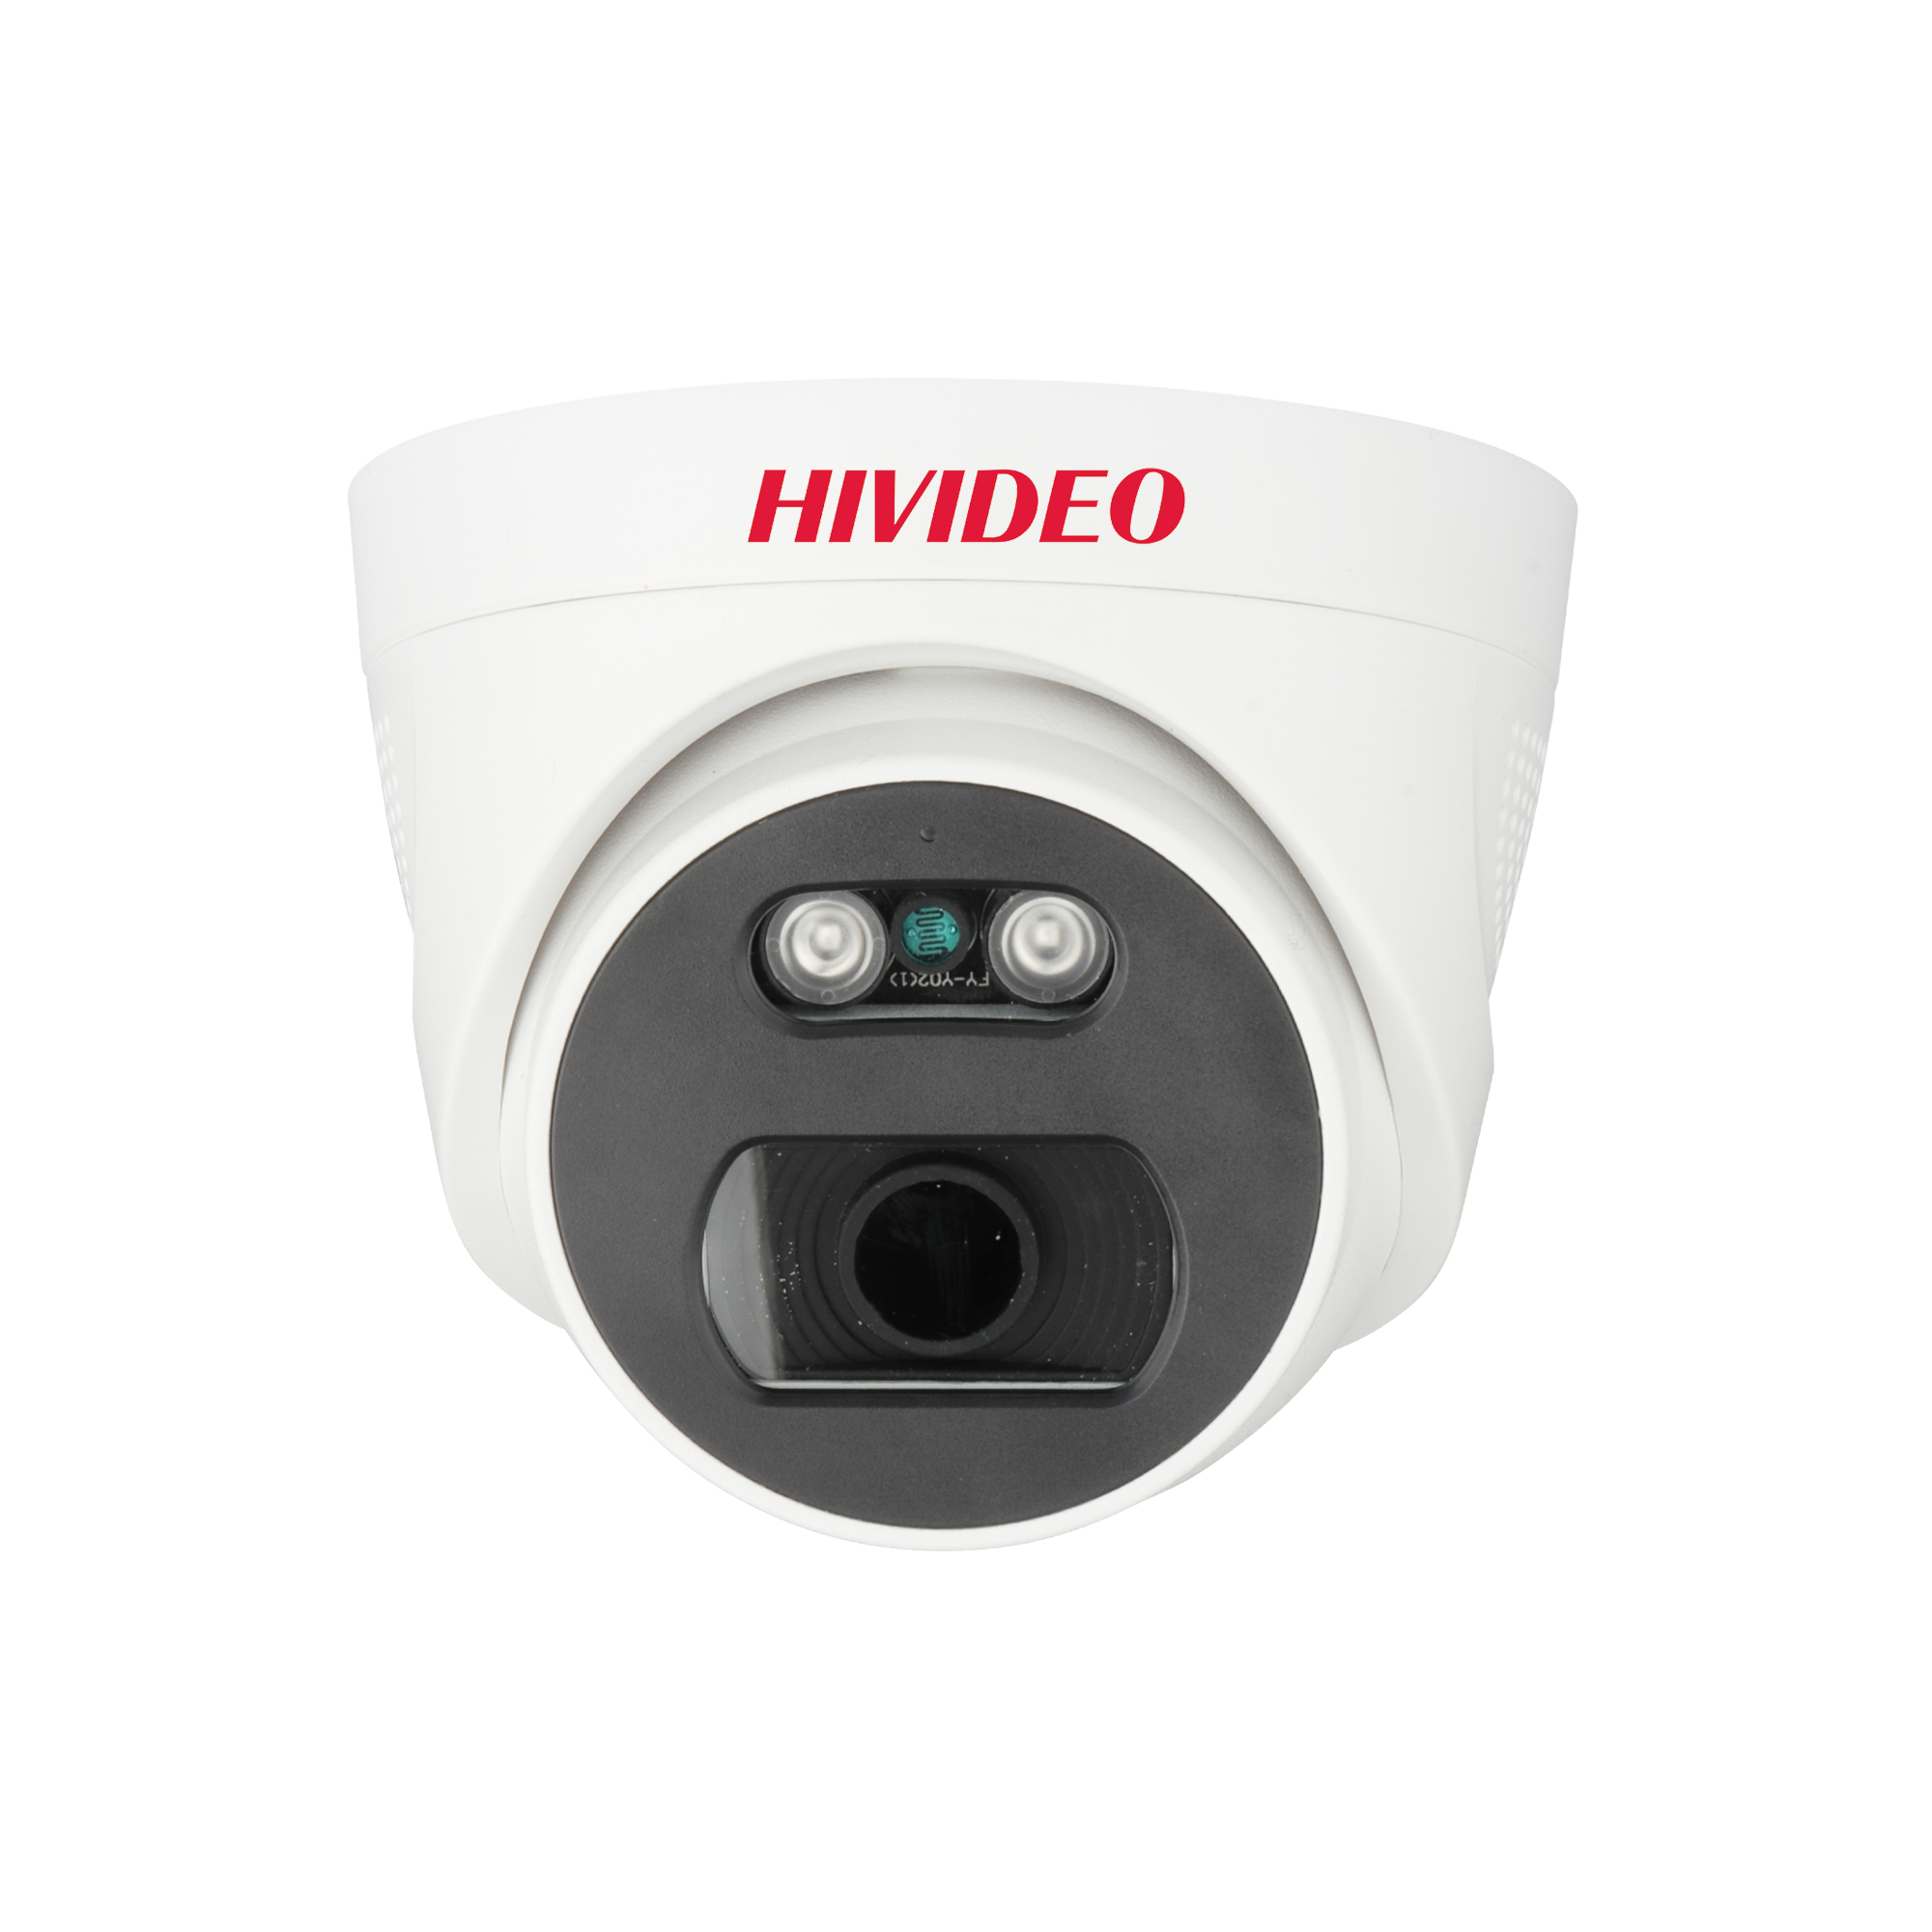 دوربین مدار بسته دام HIVIDEO مدل HI-D73615